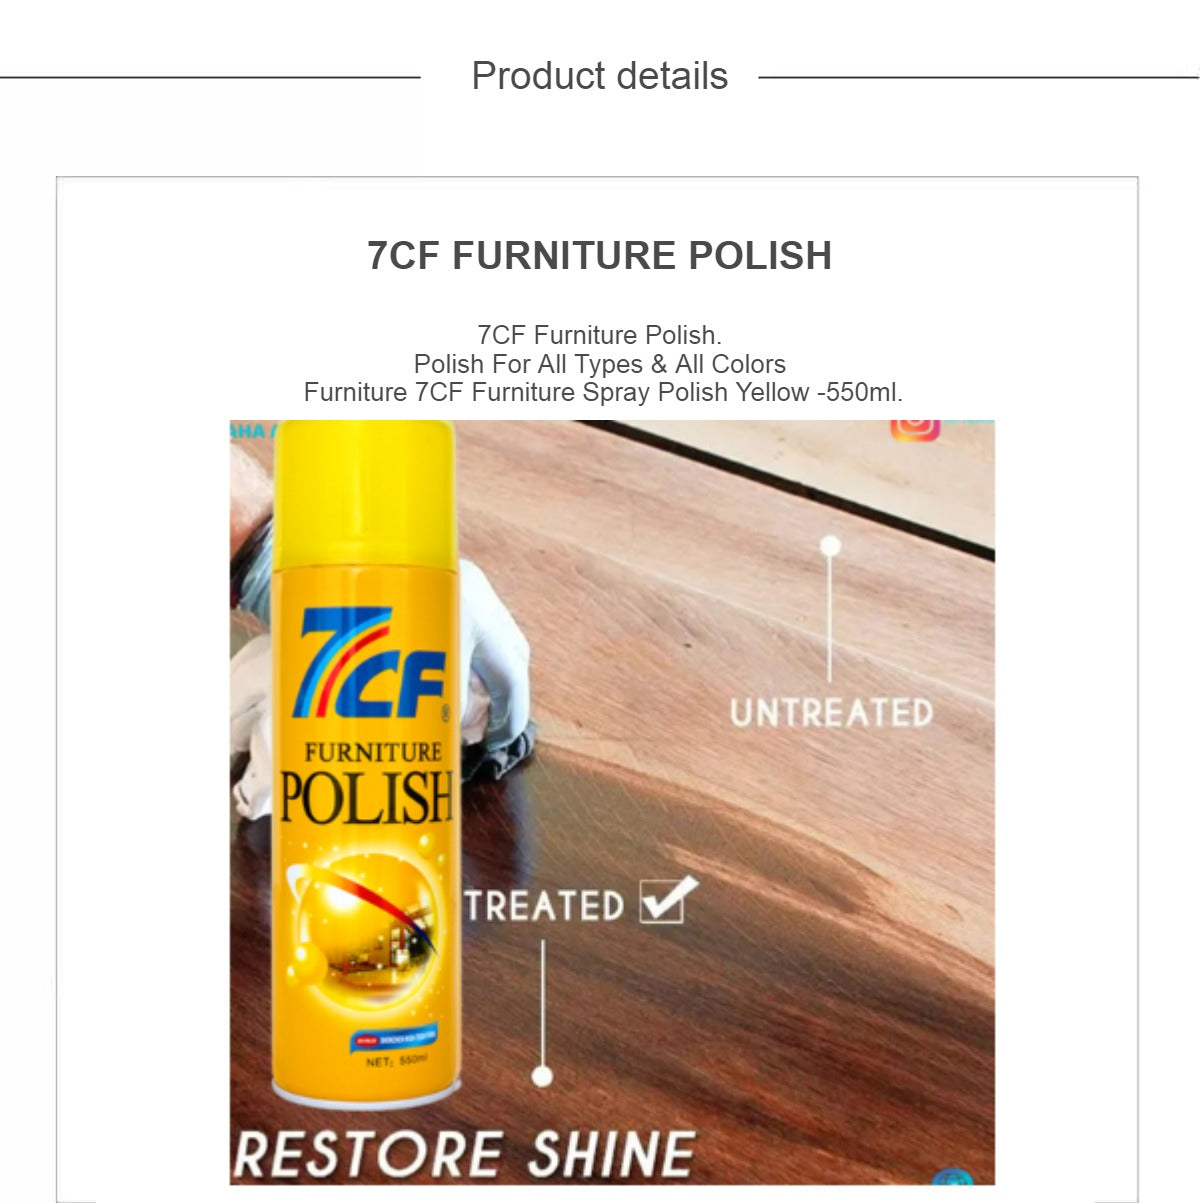 7CF Furniture Foam Spray Polish shining